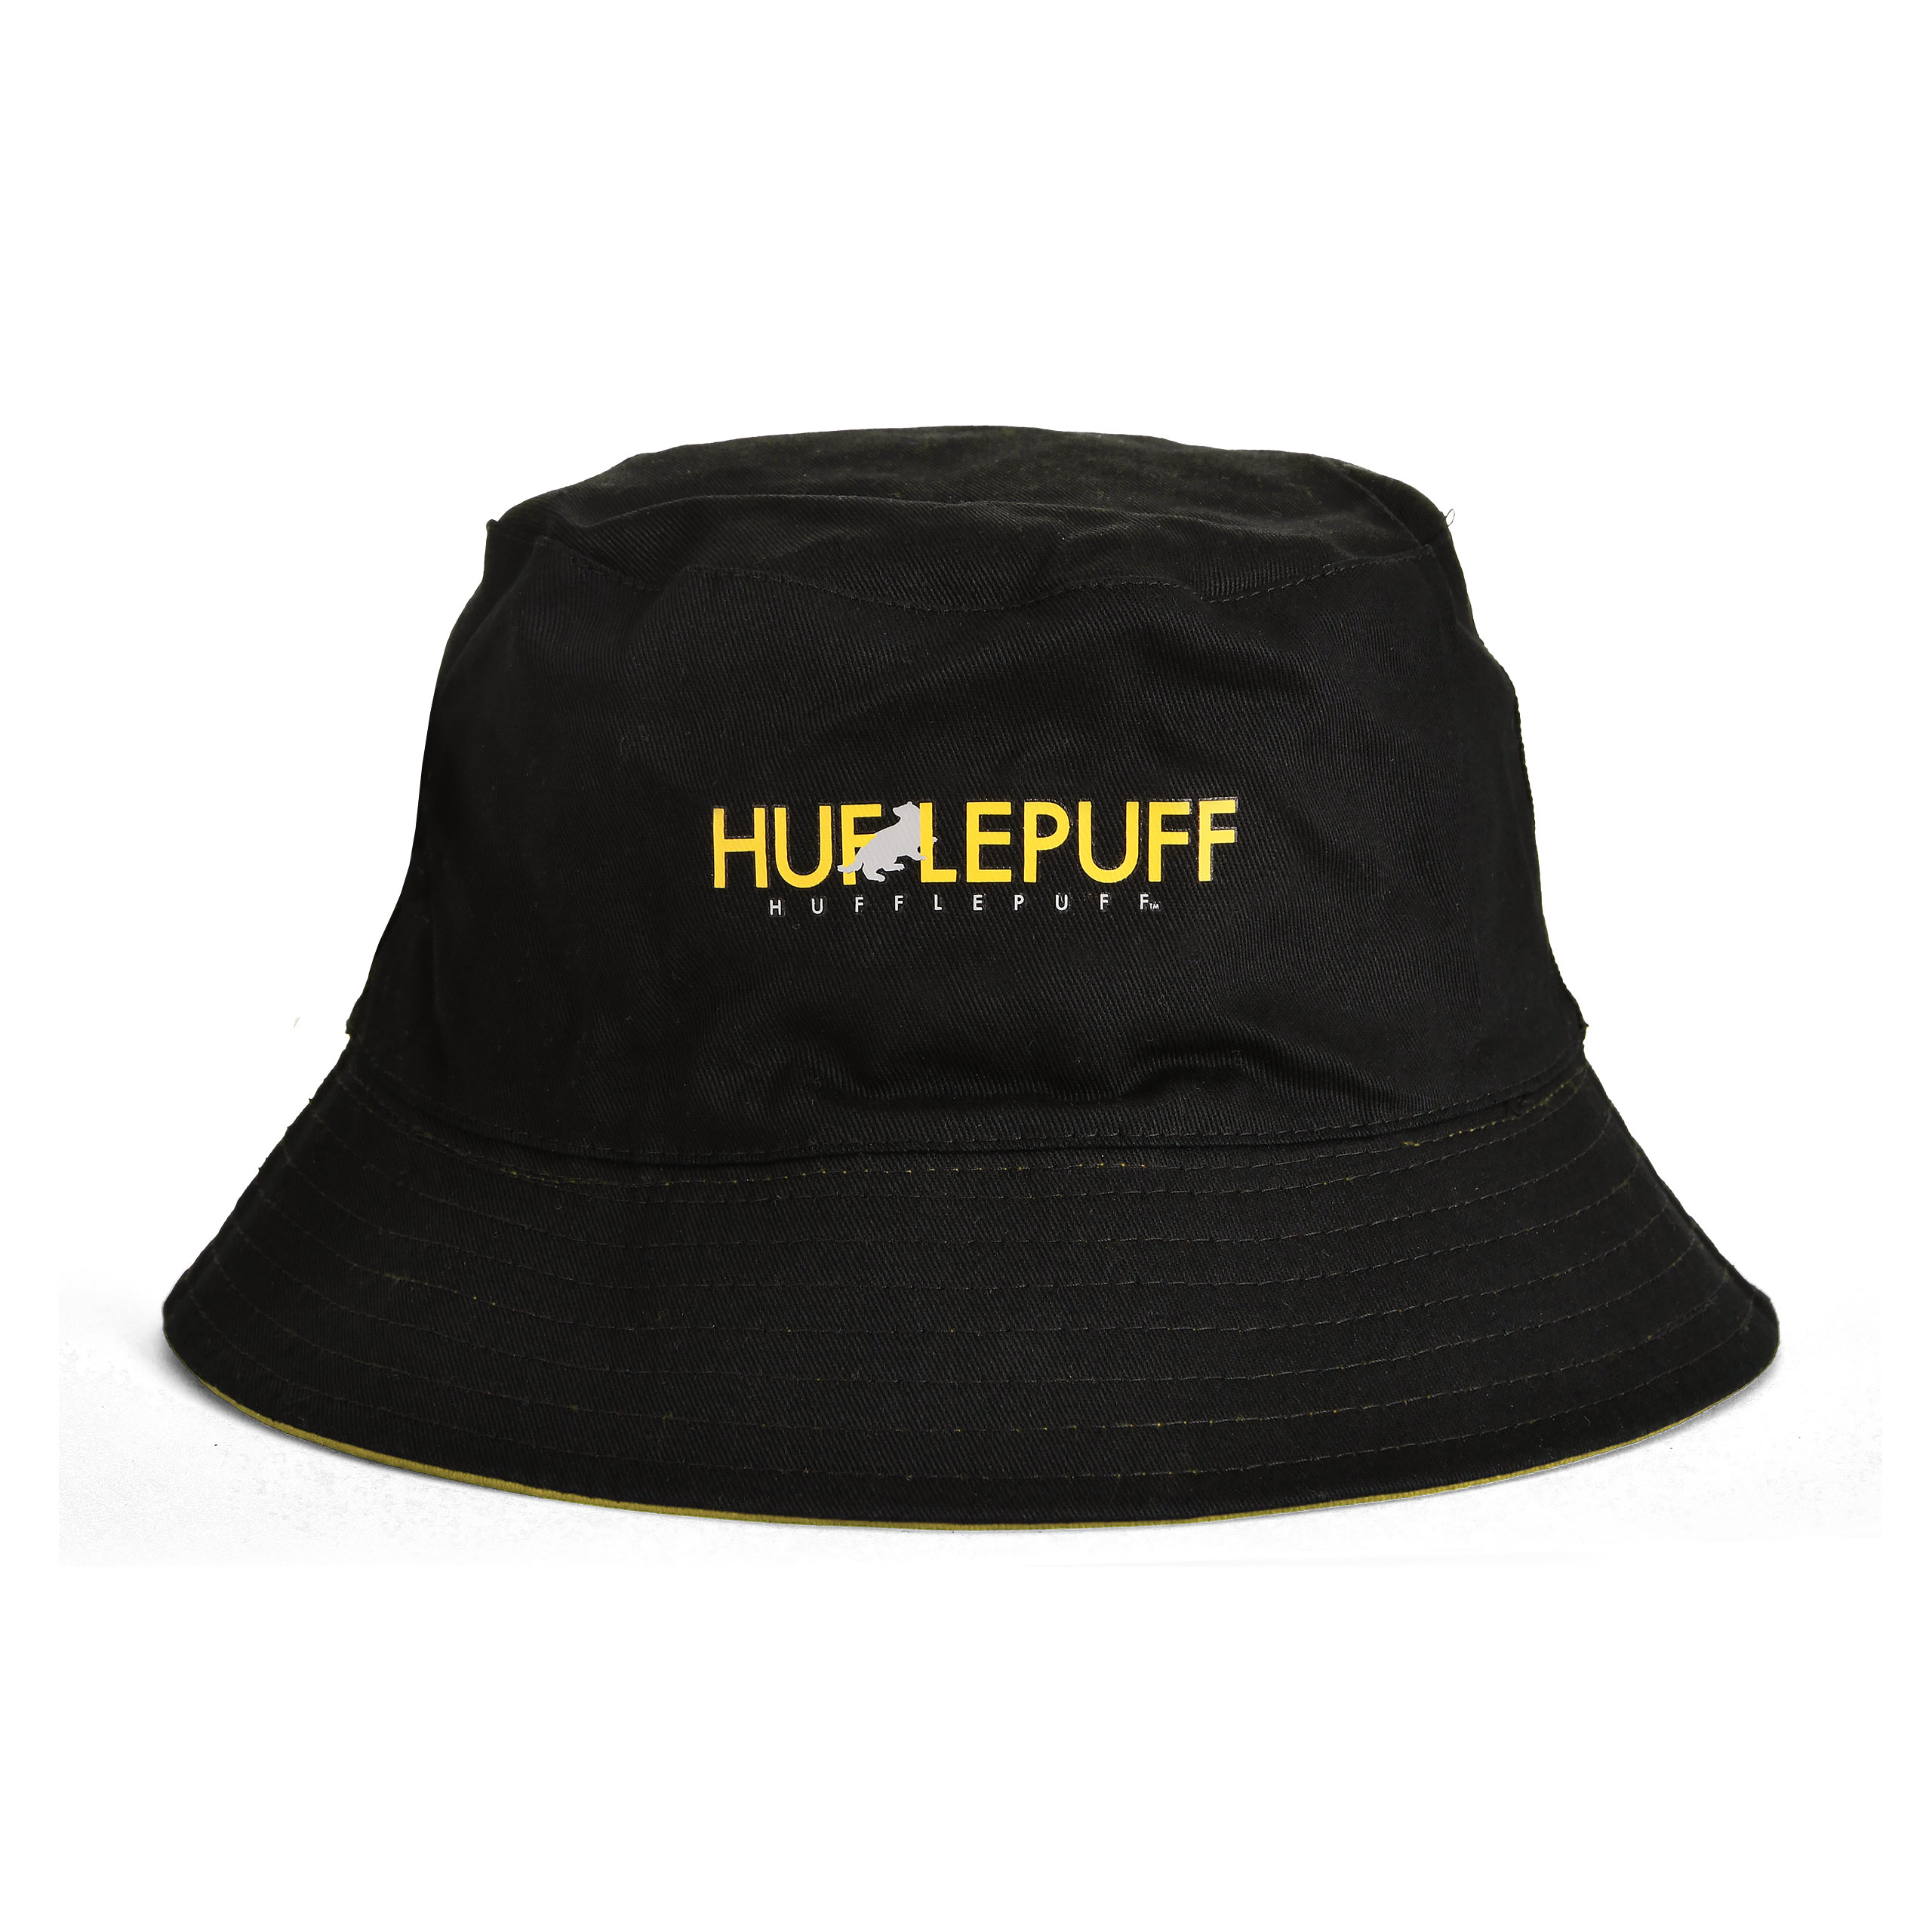 Chapeau blason Hufflepuff avec motif réversible - Harry Potter